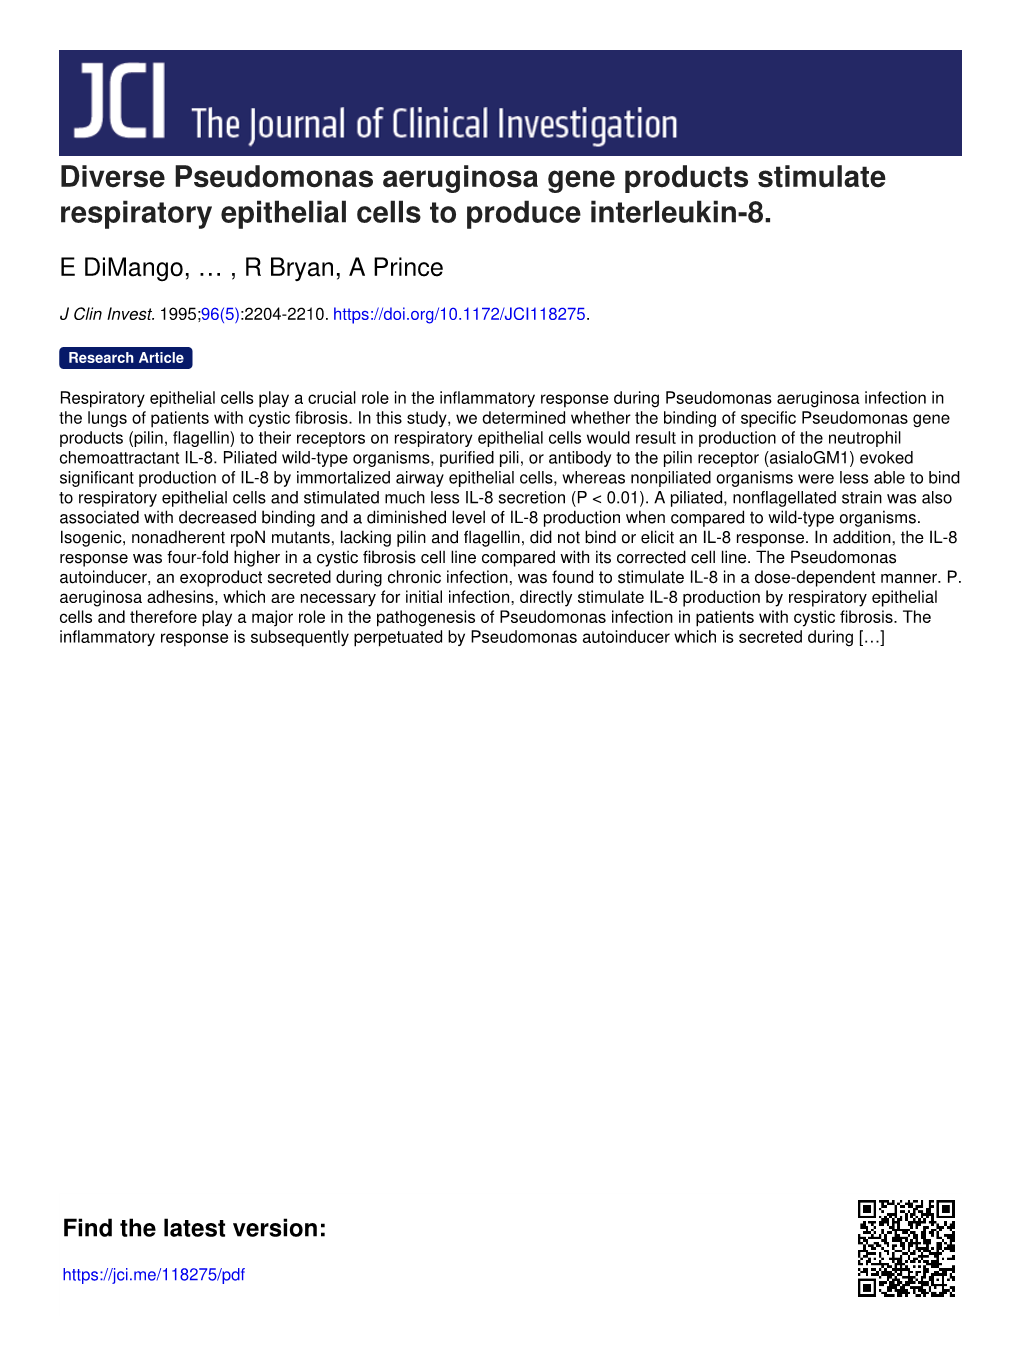 Diverse Pseudomonas Aeruginosa Gene Products Stimulate Respiratory Epithelial Cells to Produce Interleukin-8